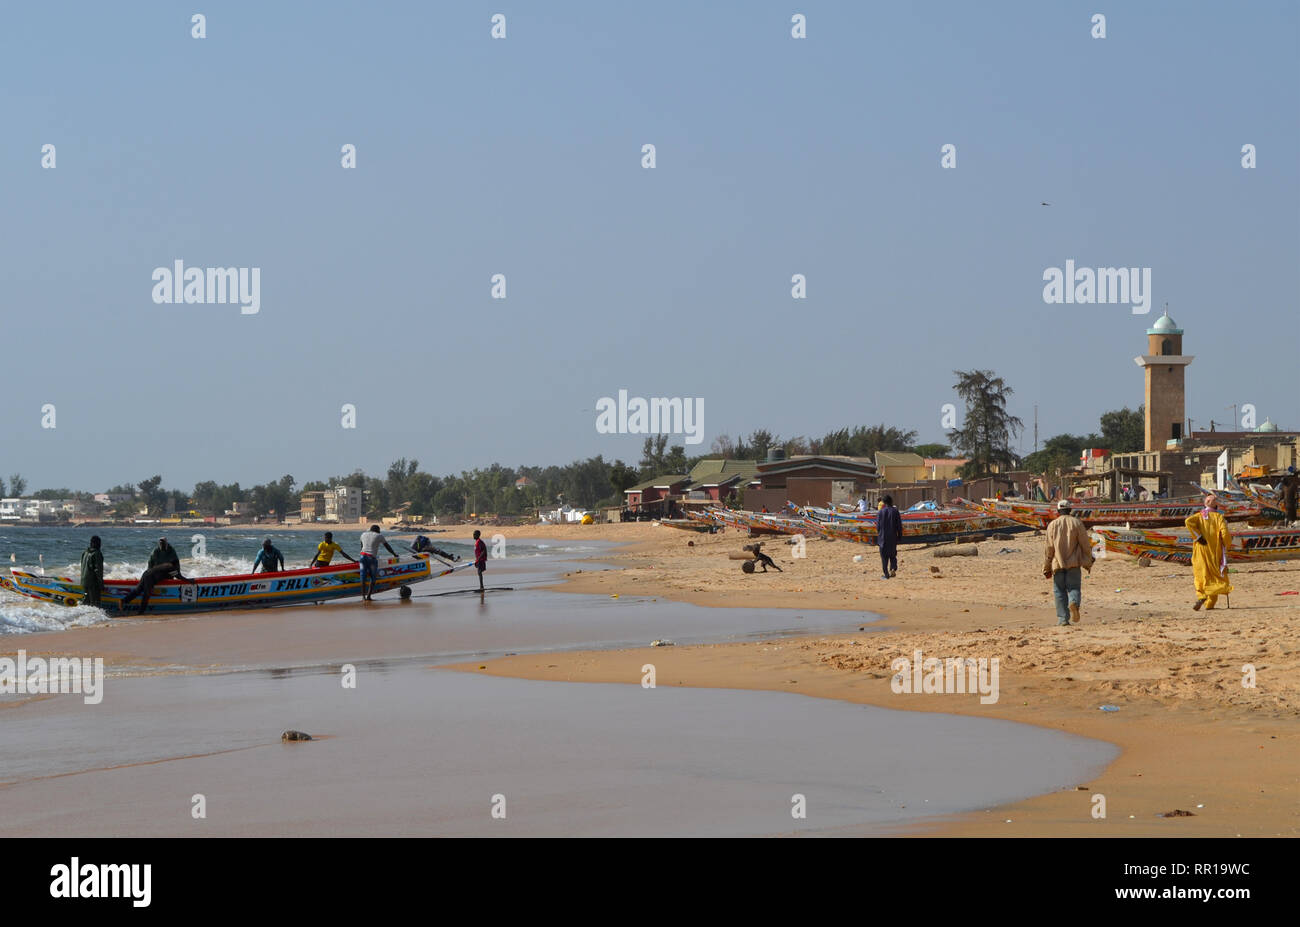 Ngaparou, a small coastal community in the Petite Cote of Senegal Stock Photo